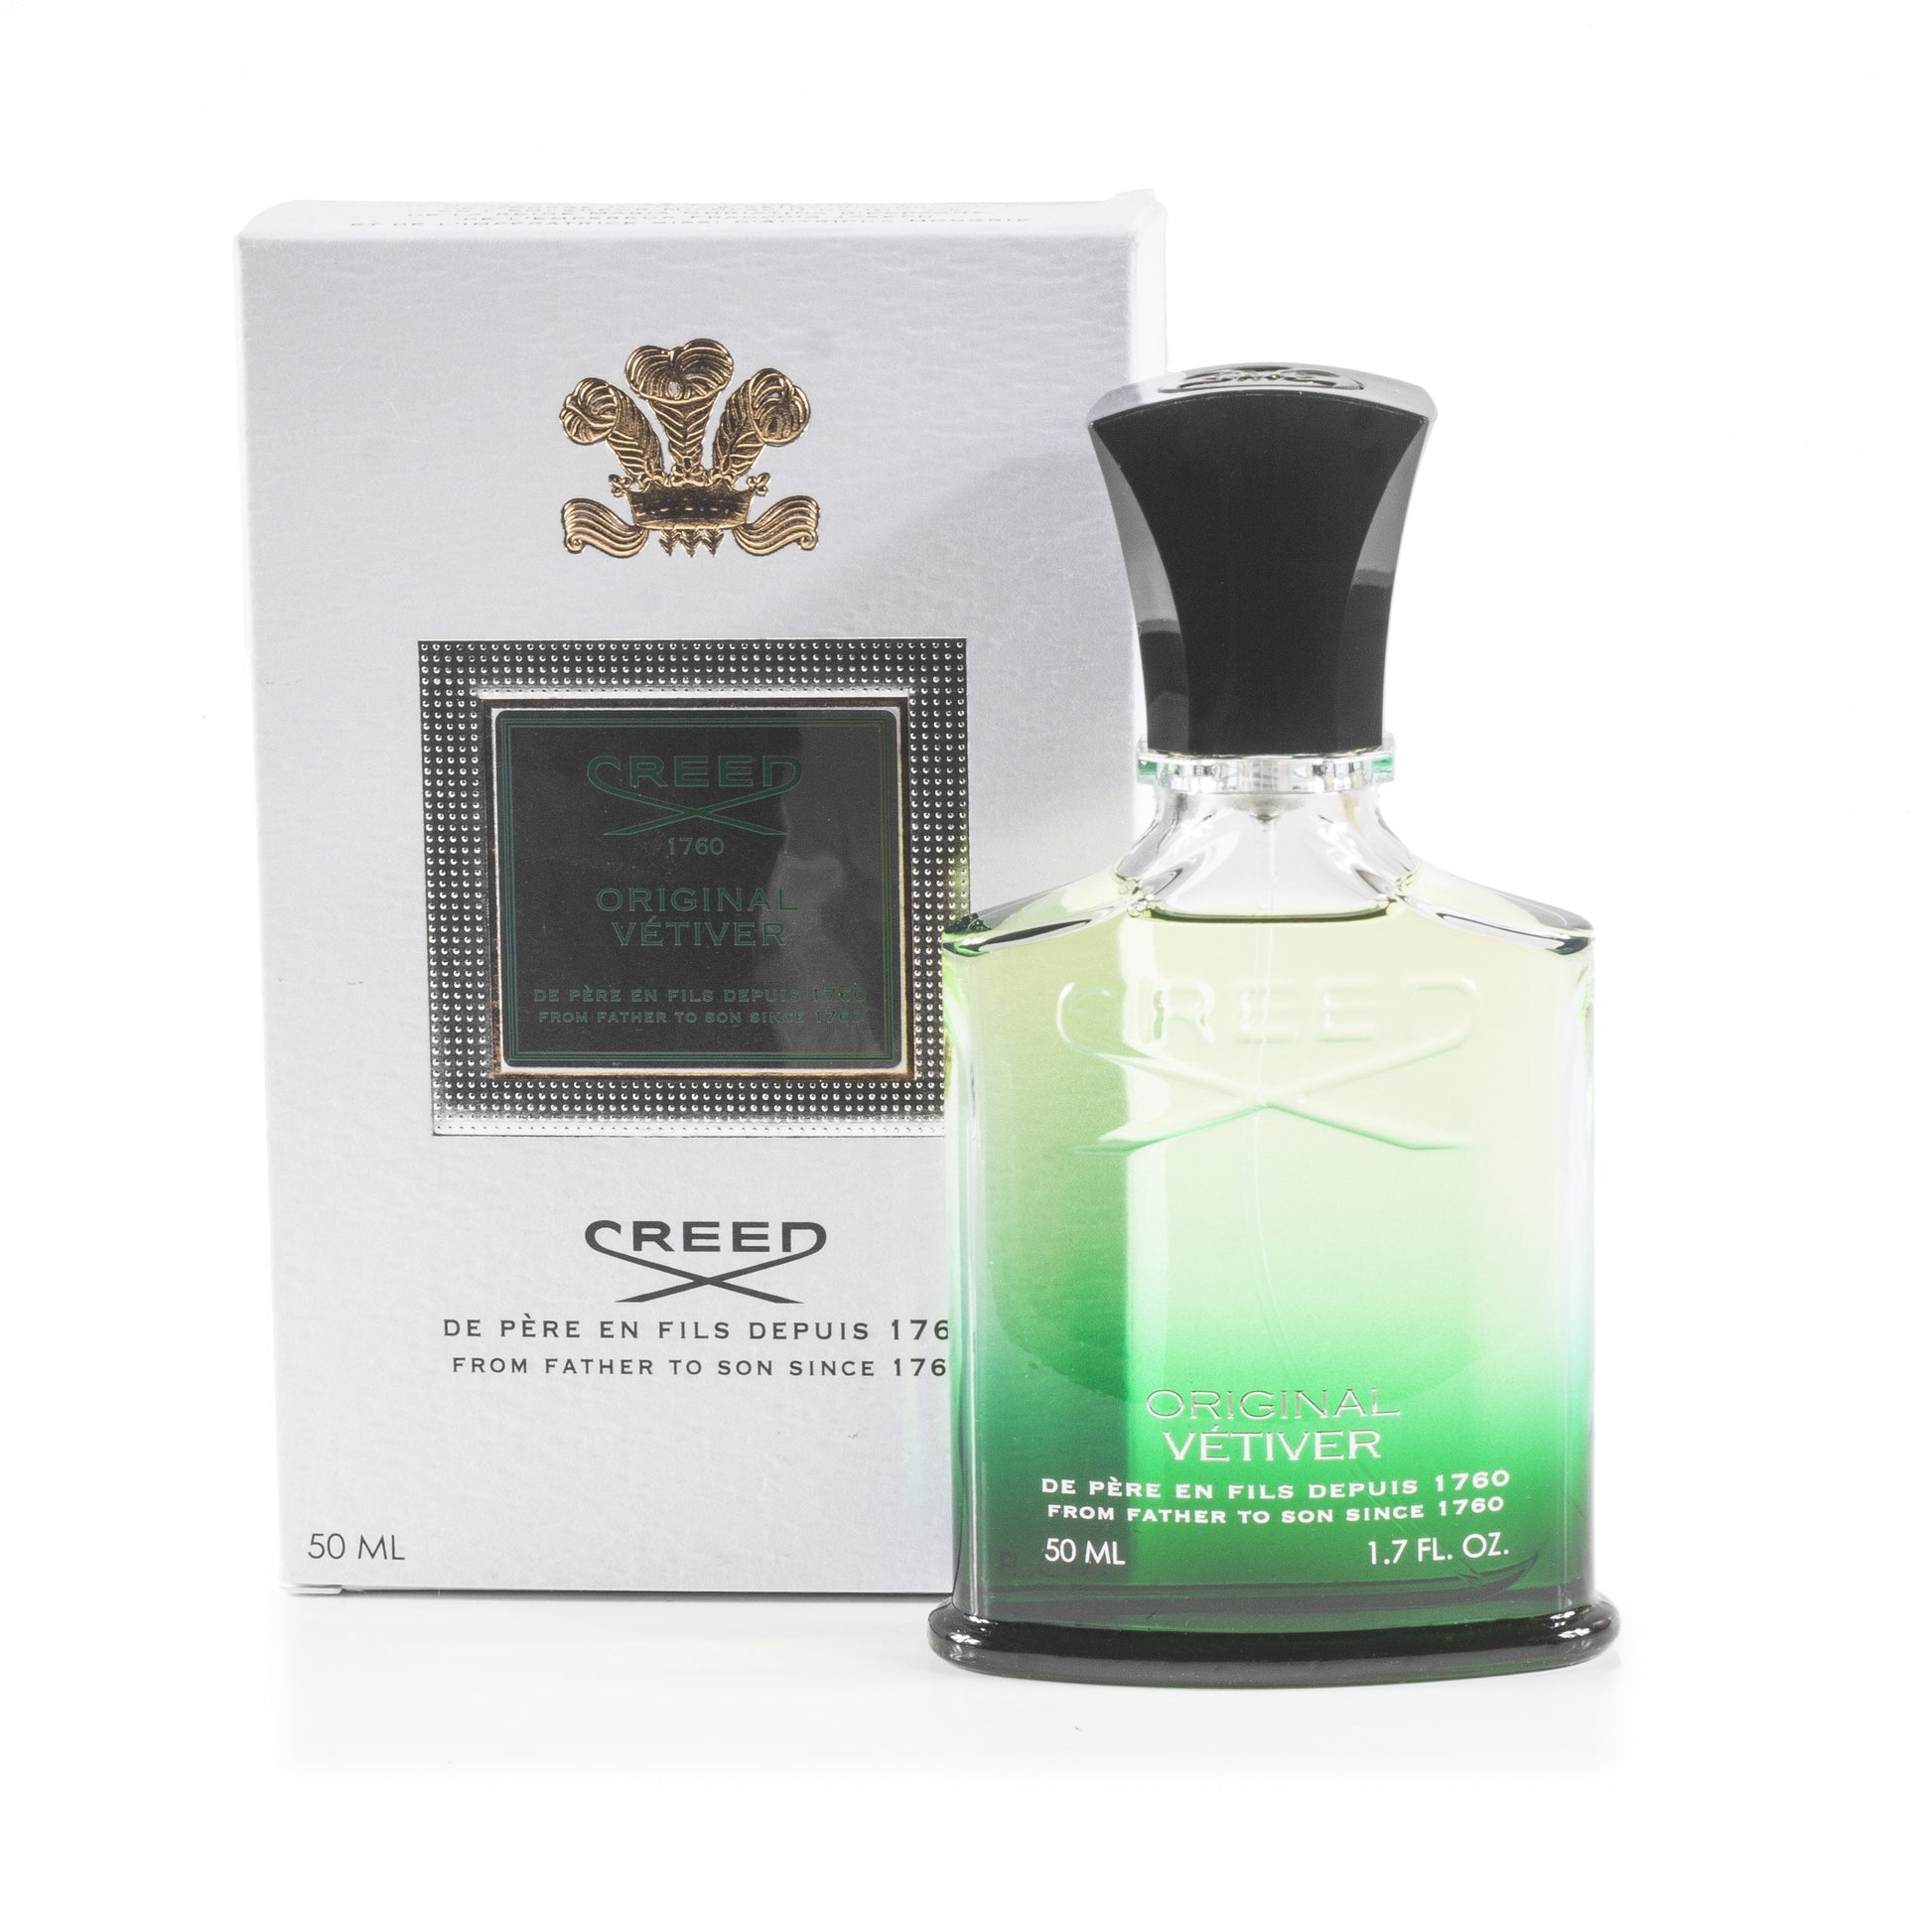 Original Vetiver Eau de Parfum Spray for Men by Creed, Product image 1